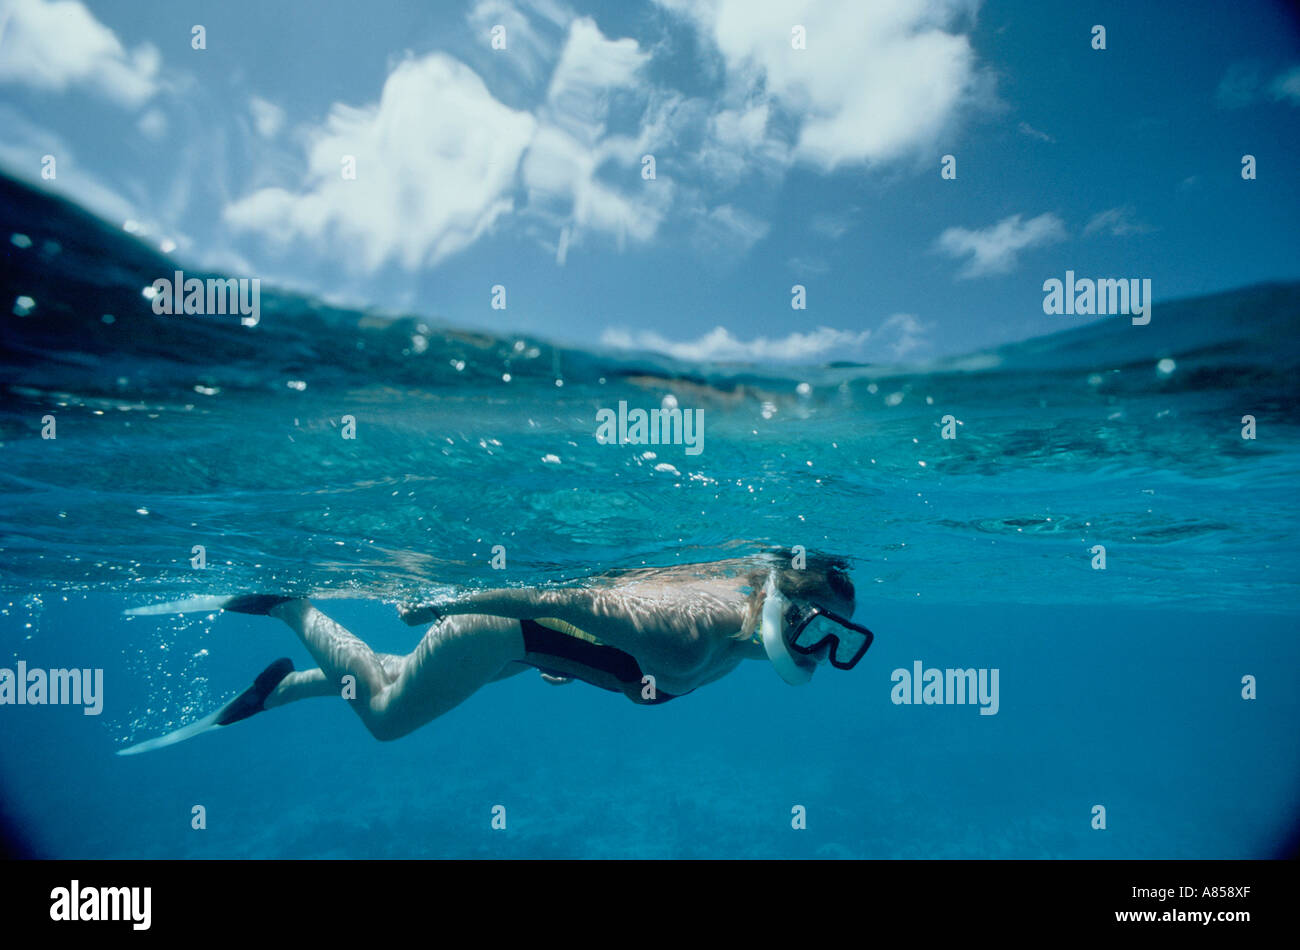 Underwater image of young woman snorkeling. Queensland. Australia. Stock Photo